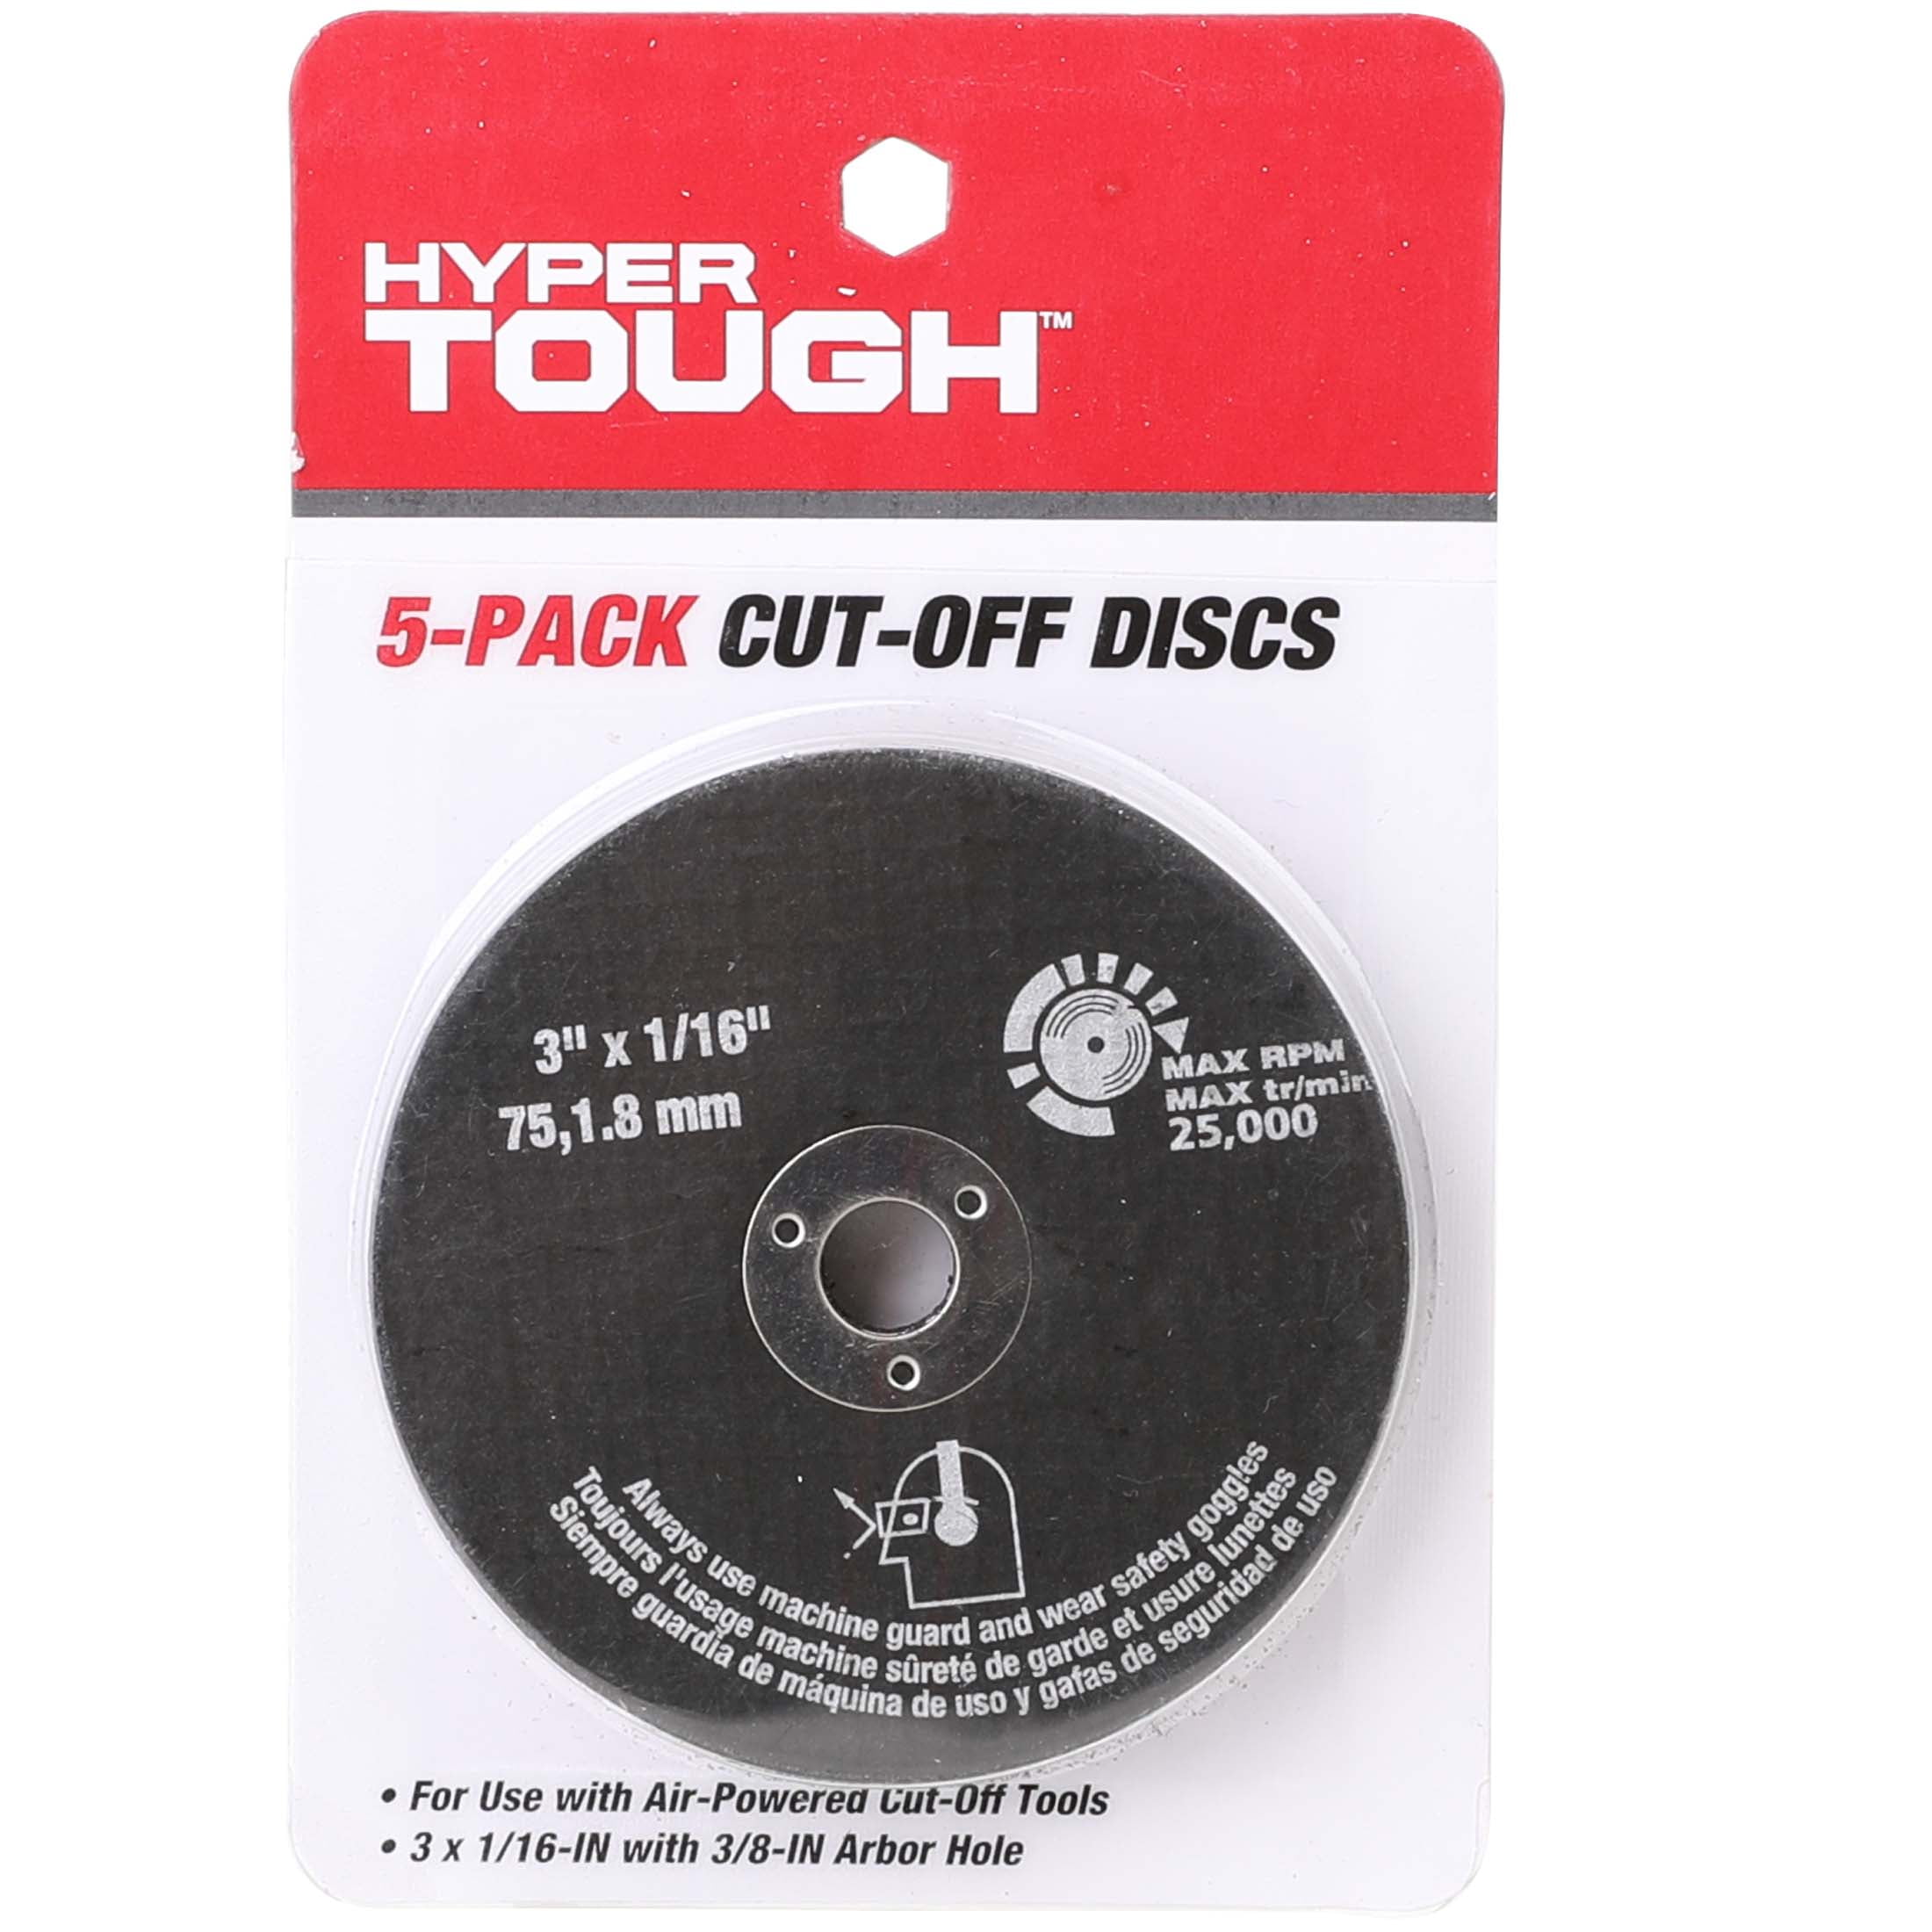 Hyper Tough 25,000 RPM 3 inch AL2O3 Cut-off Discs Set 5 Pack for Replacement, 25-311HT